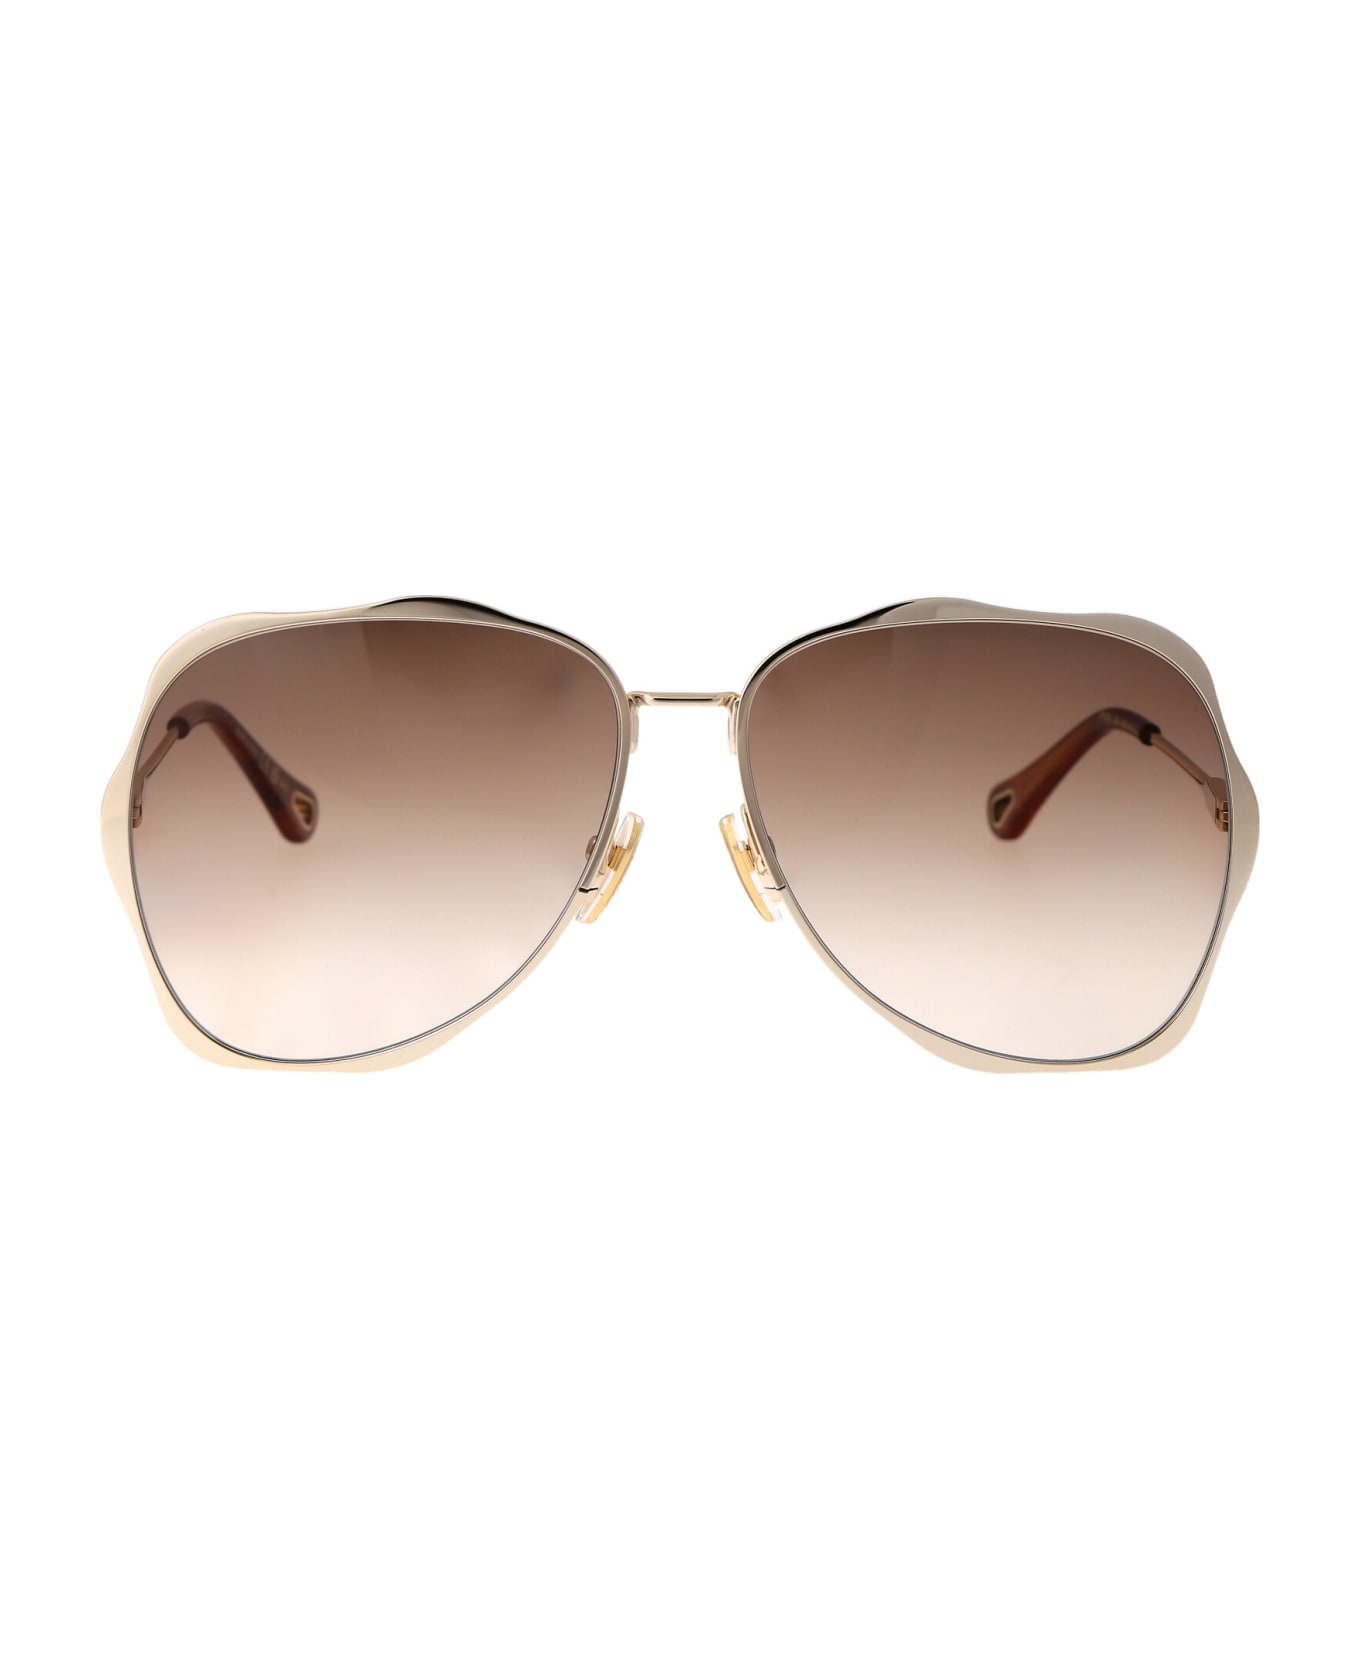 Chloé Eyewear Ch0177s Sunglasses - 002 GOLD GOLD BROWN